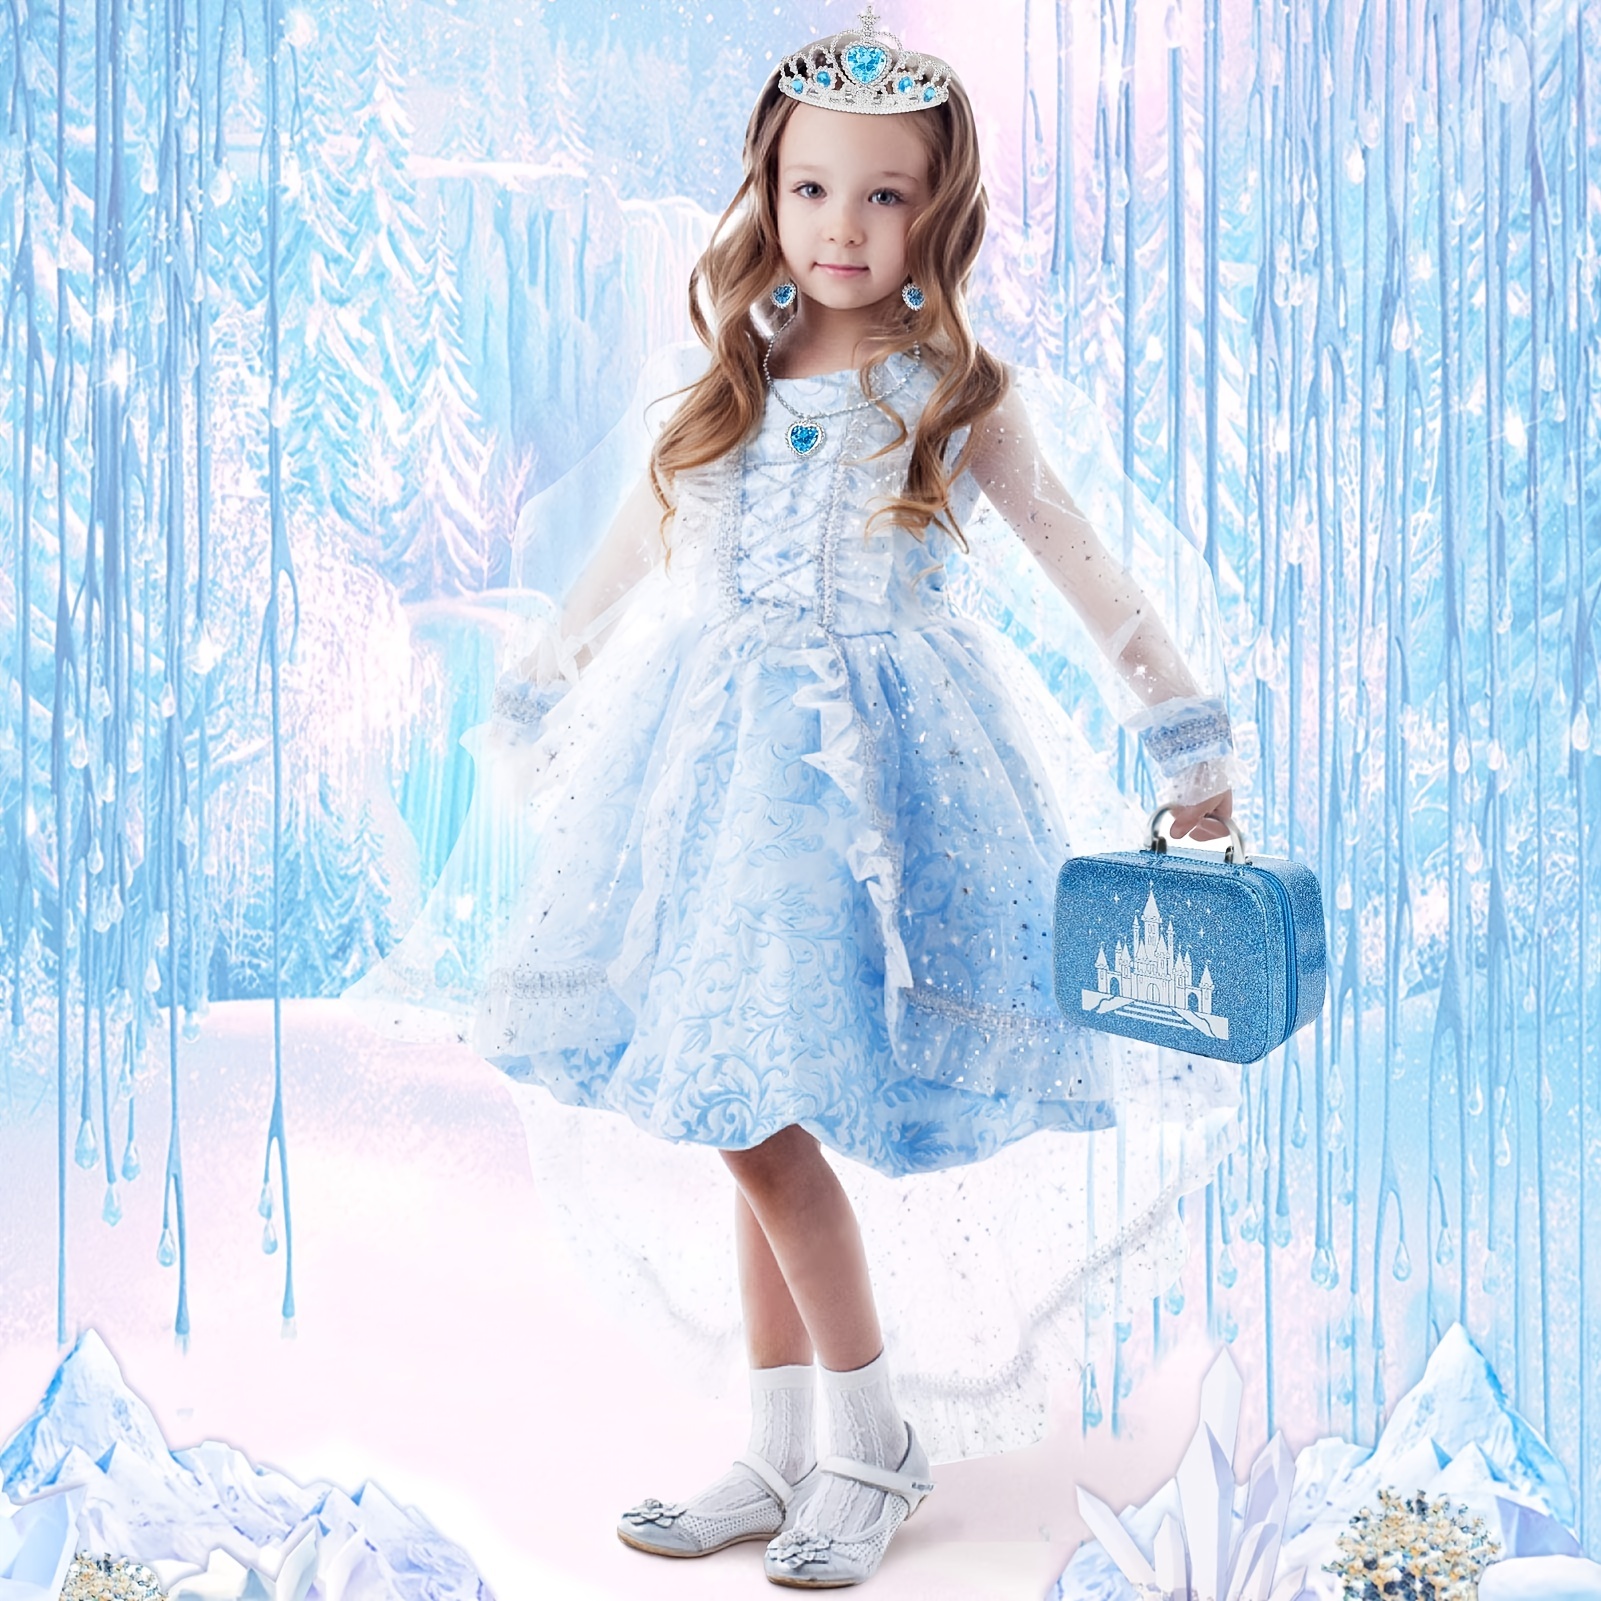 Washable Non-Toxic Kids Makeup Kit For Girls Princess Makeup Set Toys For Girls  8-12